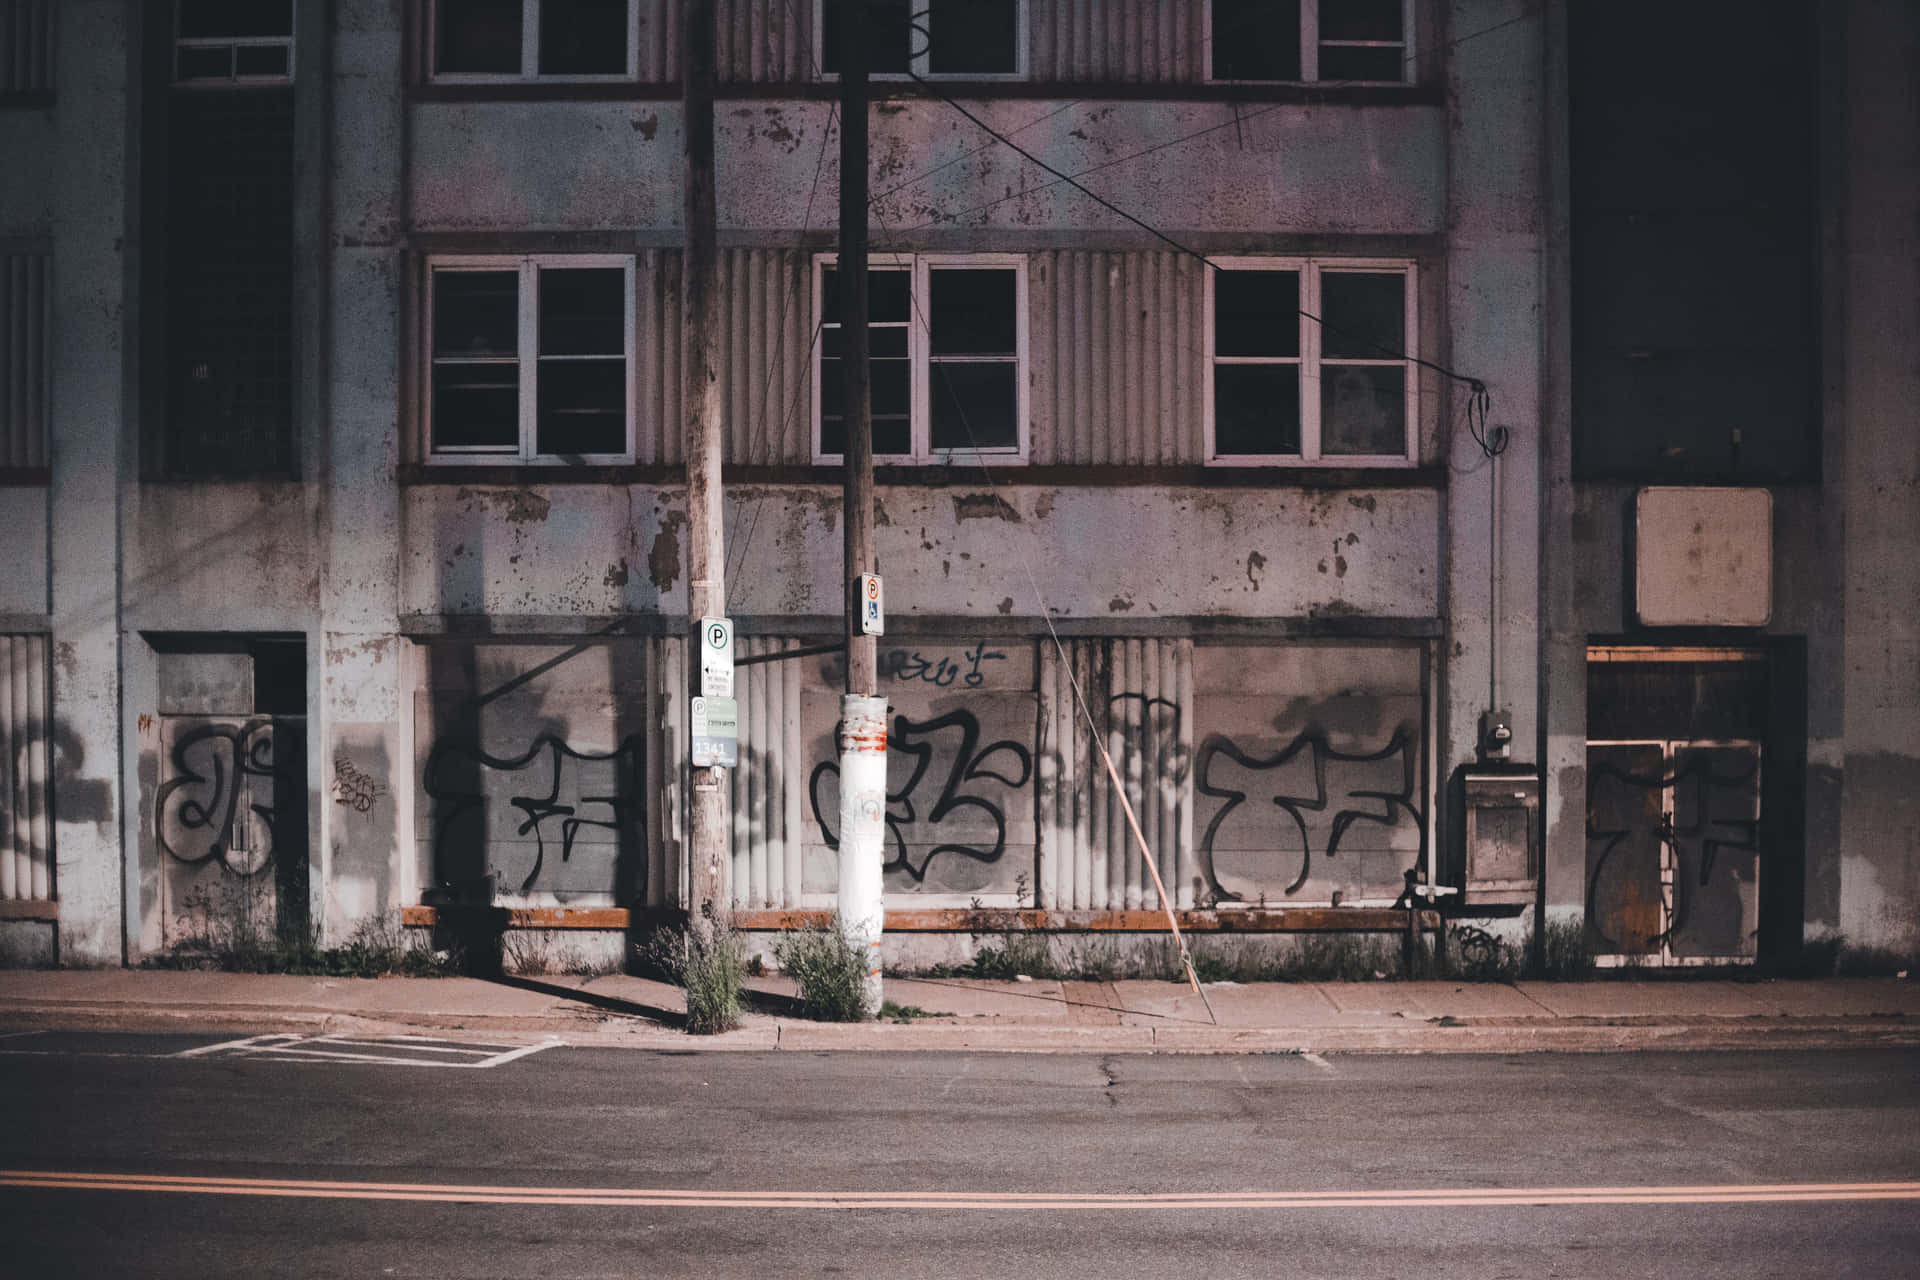 ghetto street at night